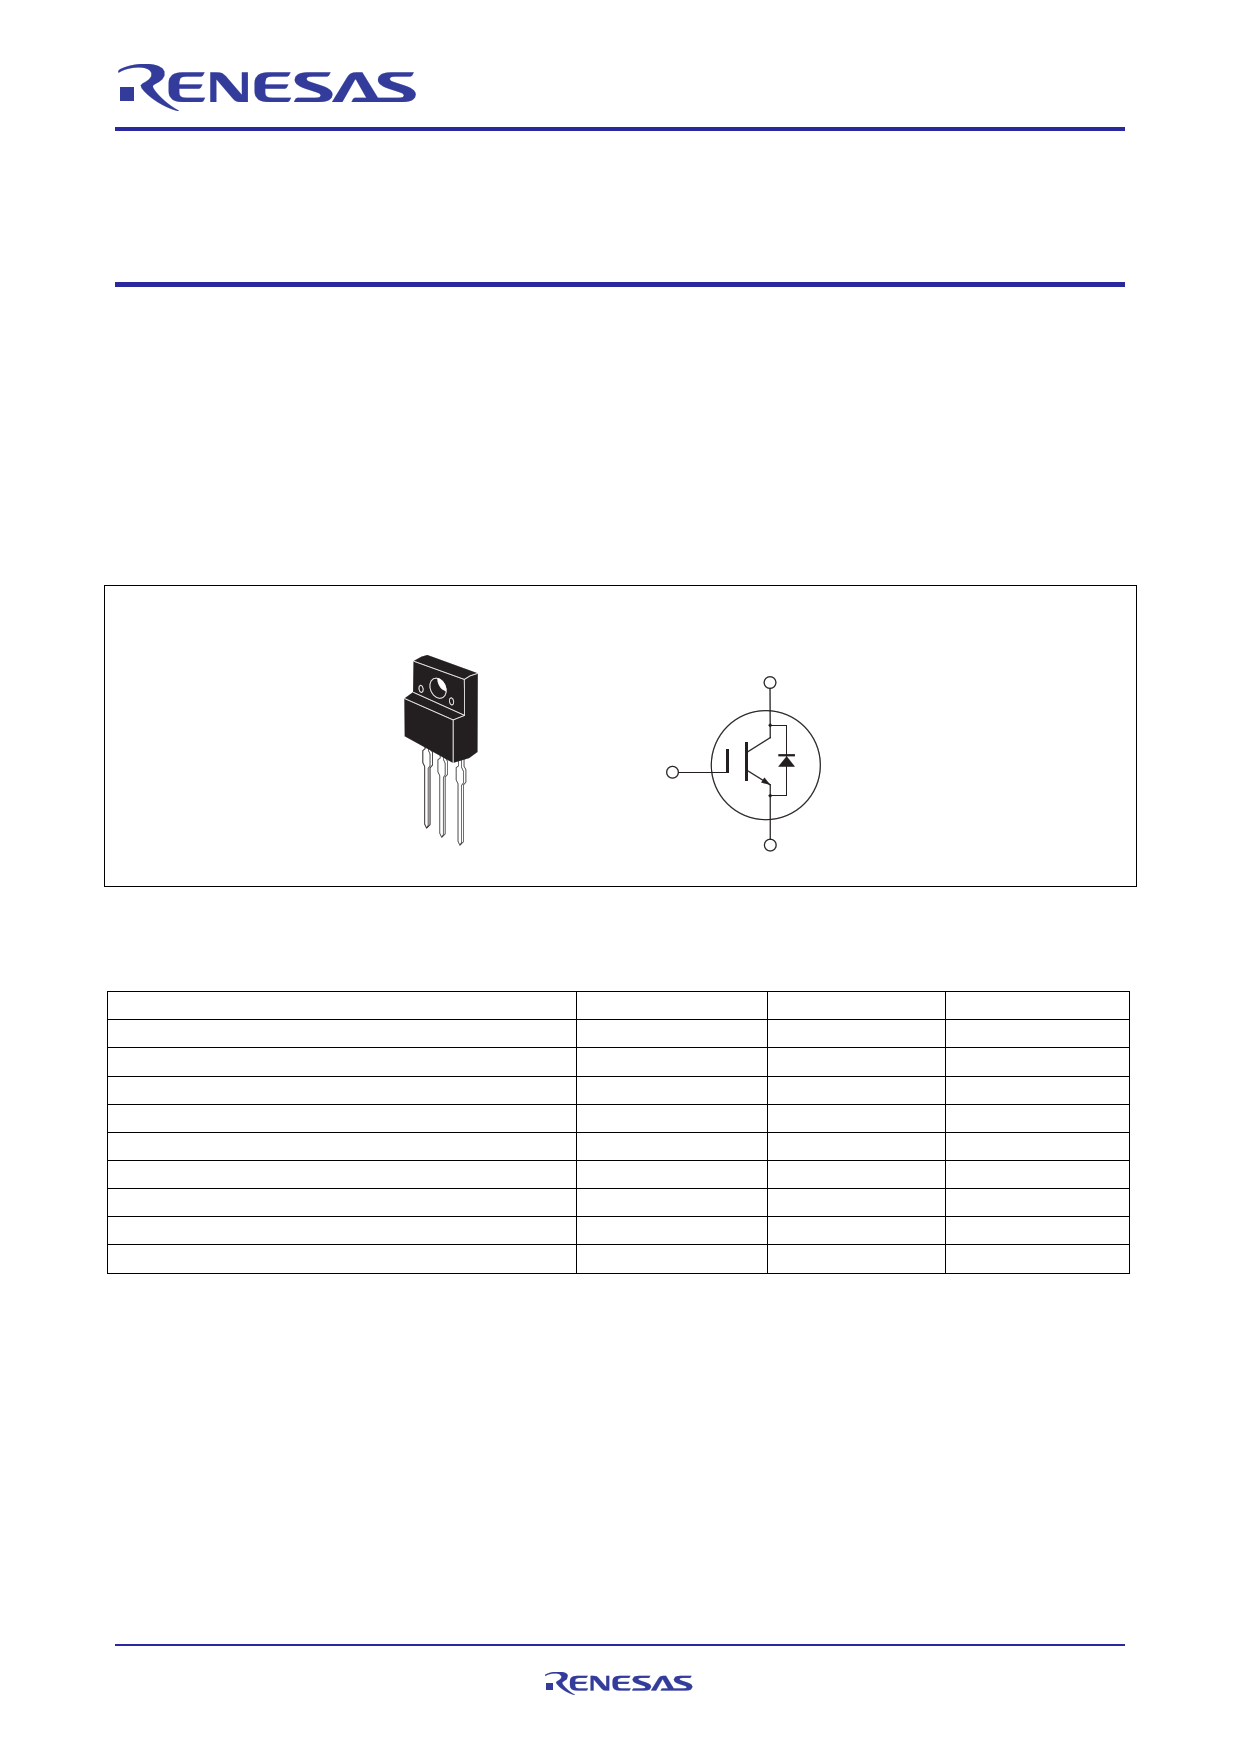 RJH30H1DPP-M0 datasheet, circuit